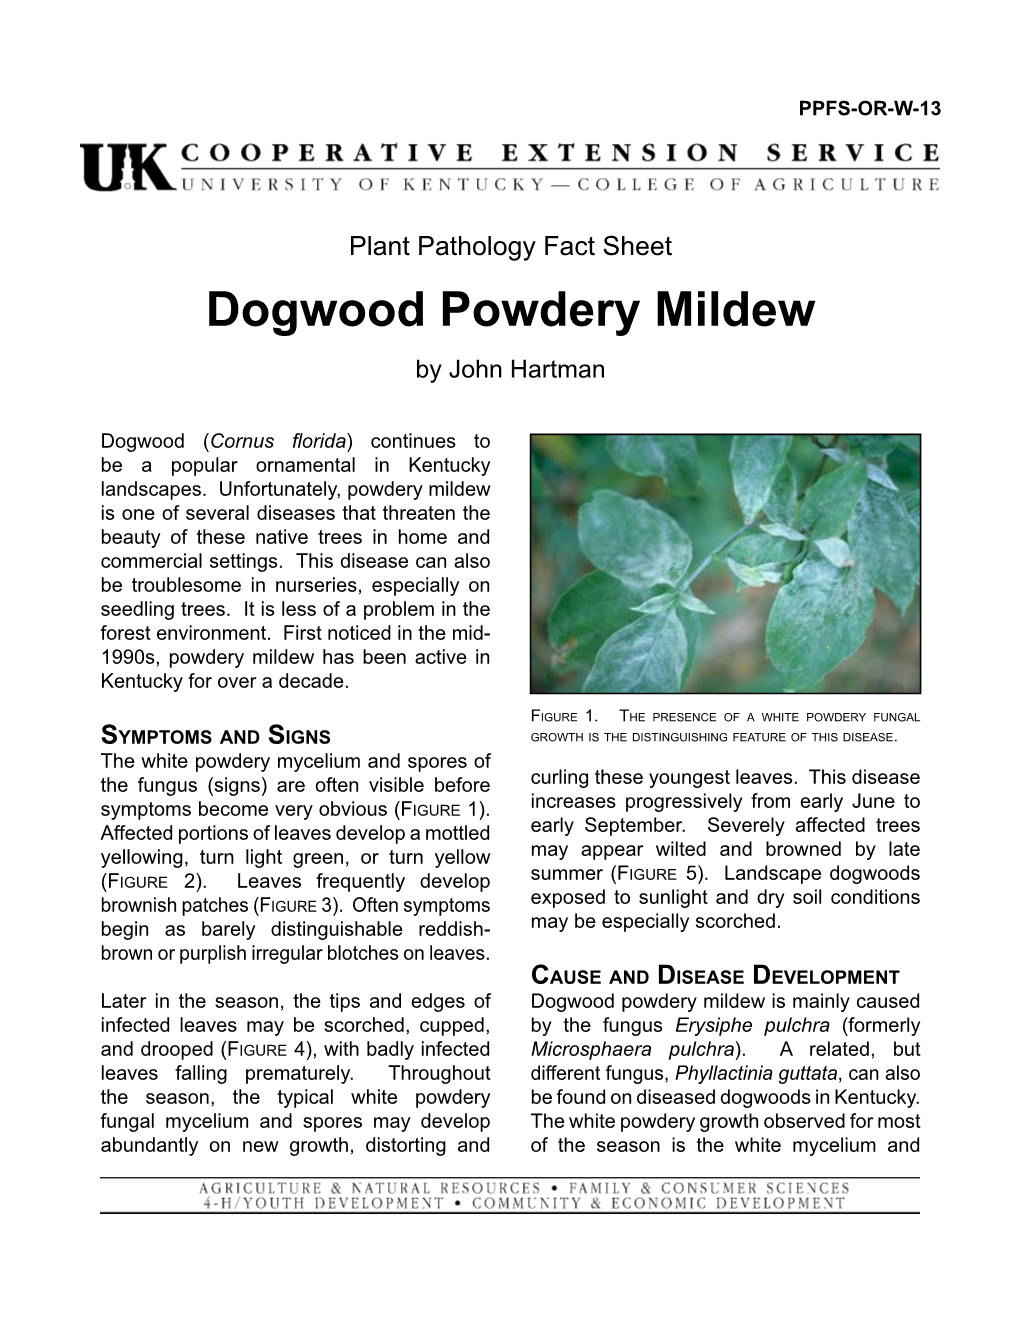 Dogwood Powdery Mildew by John Hartman